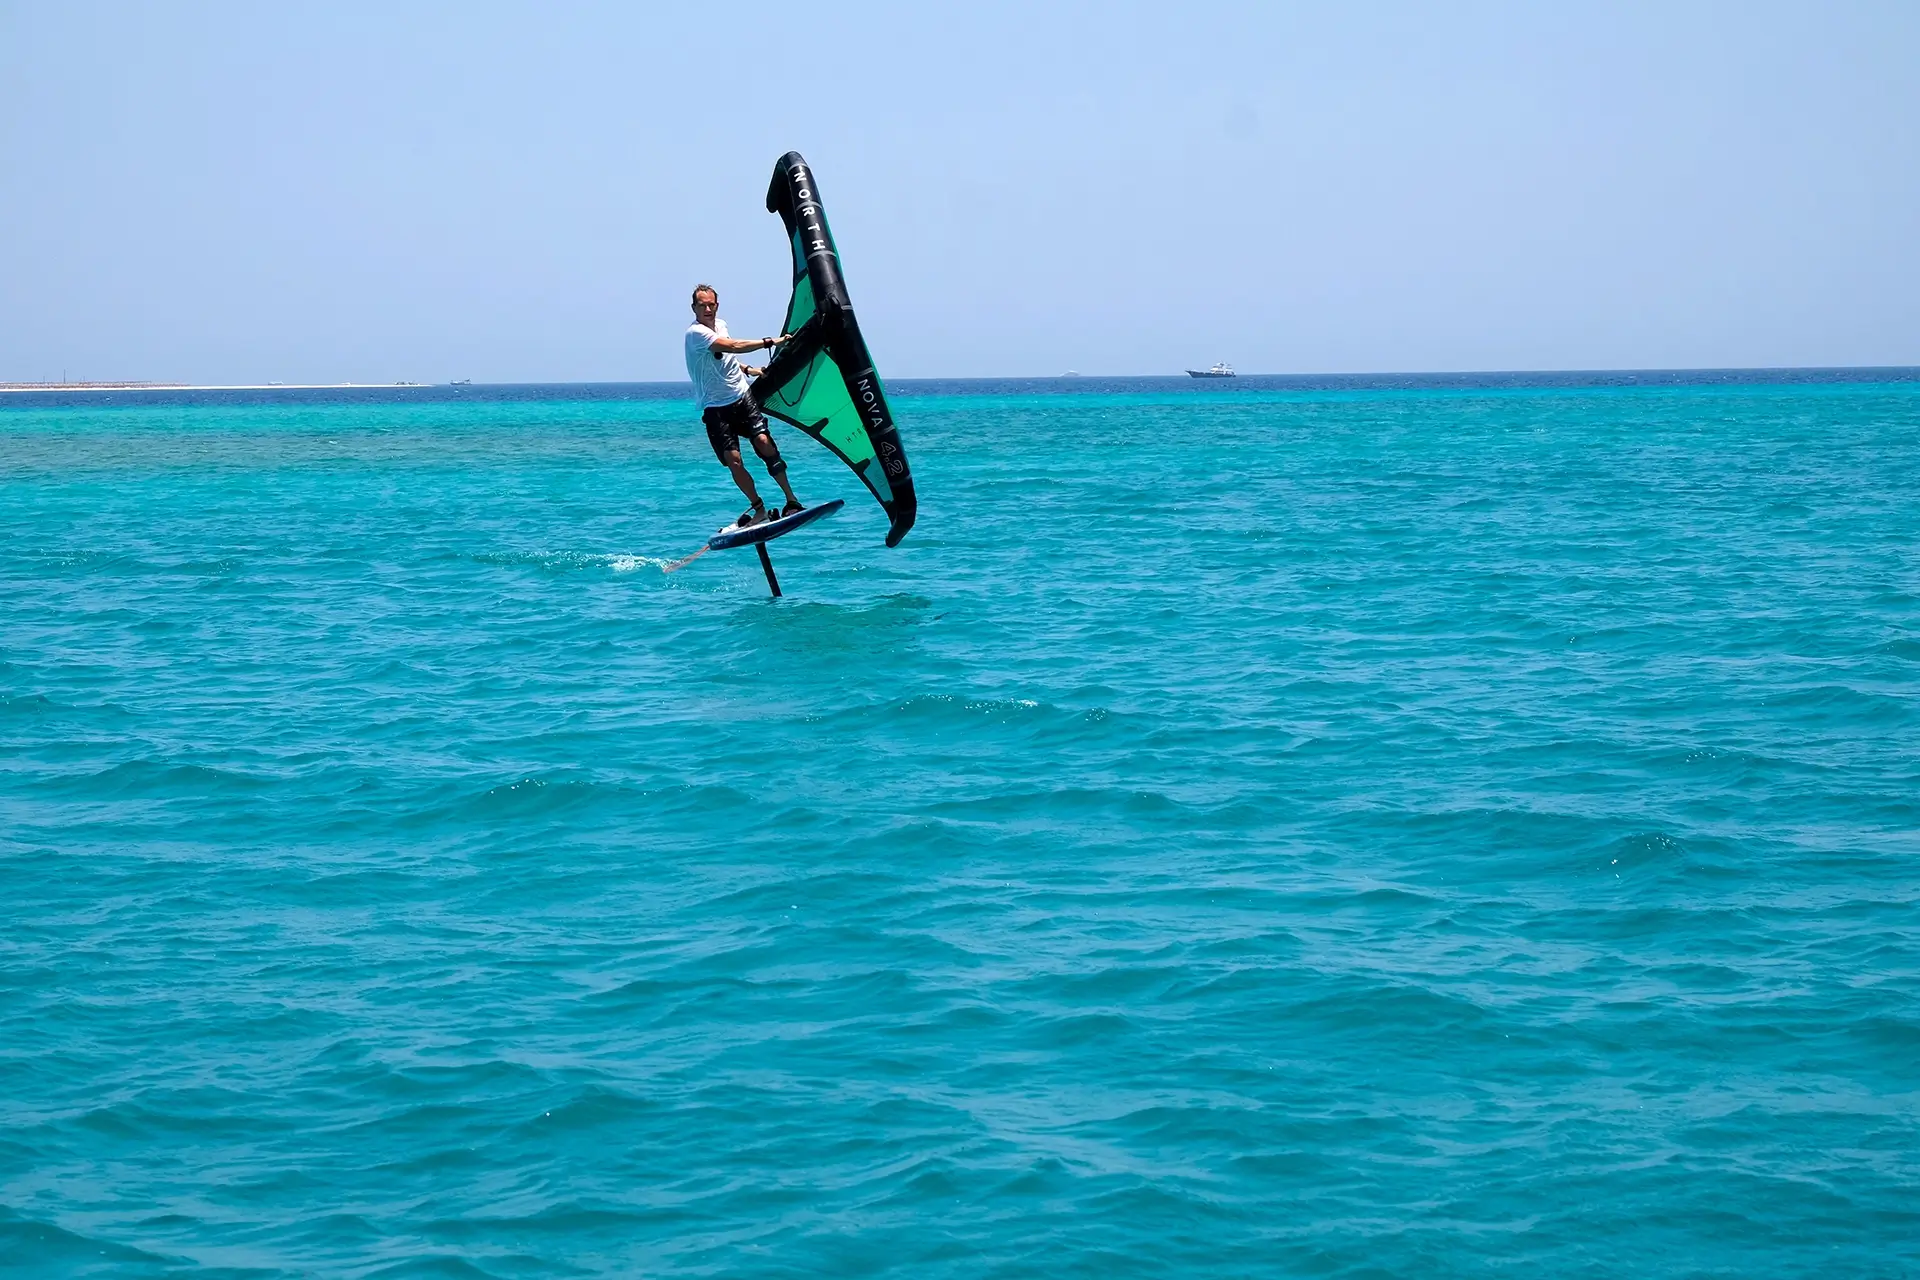 Planet Allsports Surf and Wingfoil School Soma Bay Egypt Caribbean World Resort switch cruising Felix Quadfass